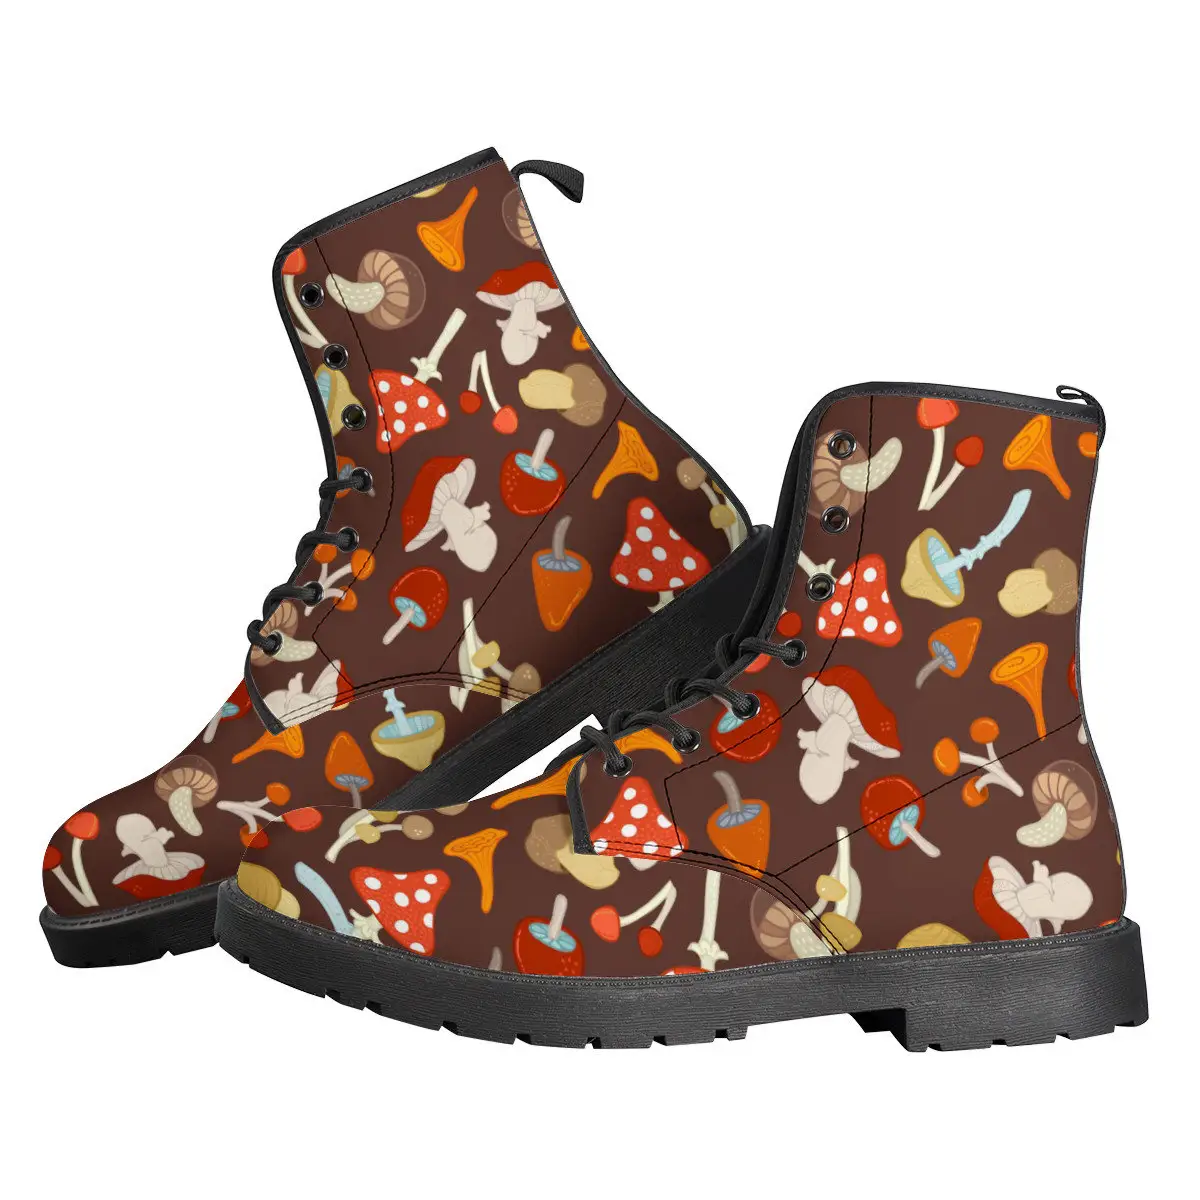 Oem Wholesale Boots Fantasy Mushroom Plant Design Women's Fashion Boots Winter Warm Casual Walking Shoes Custom Booties Female